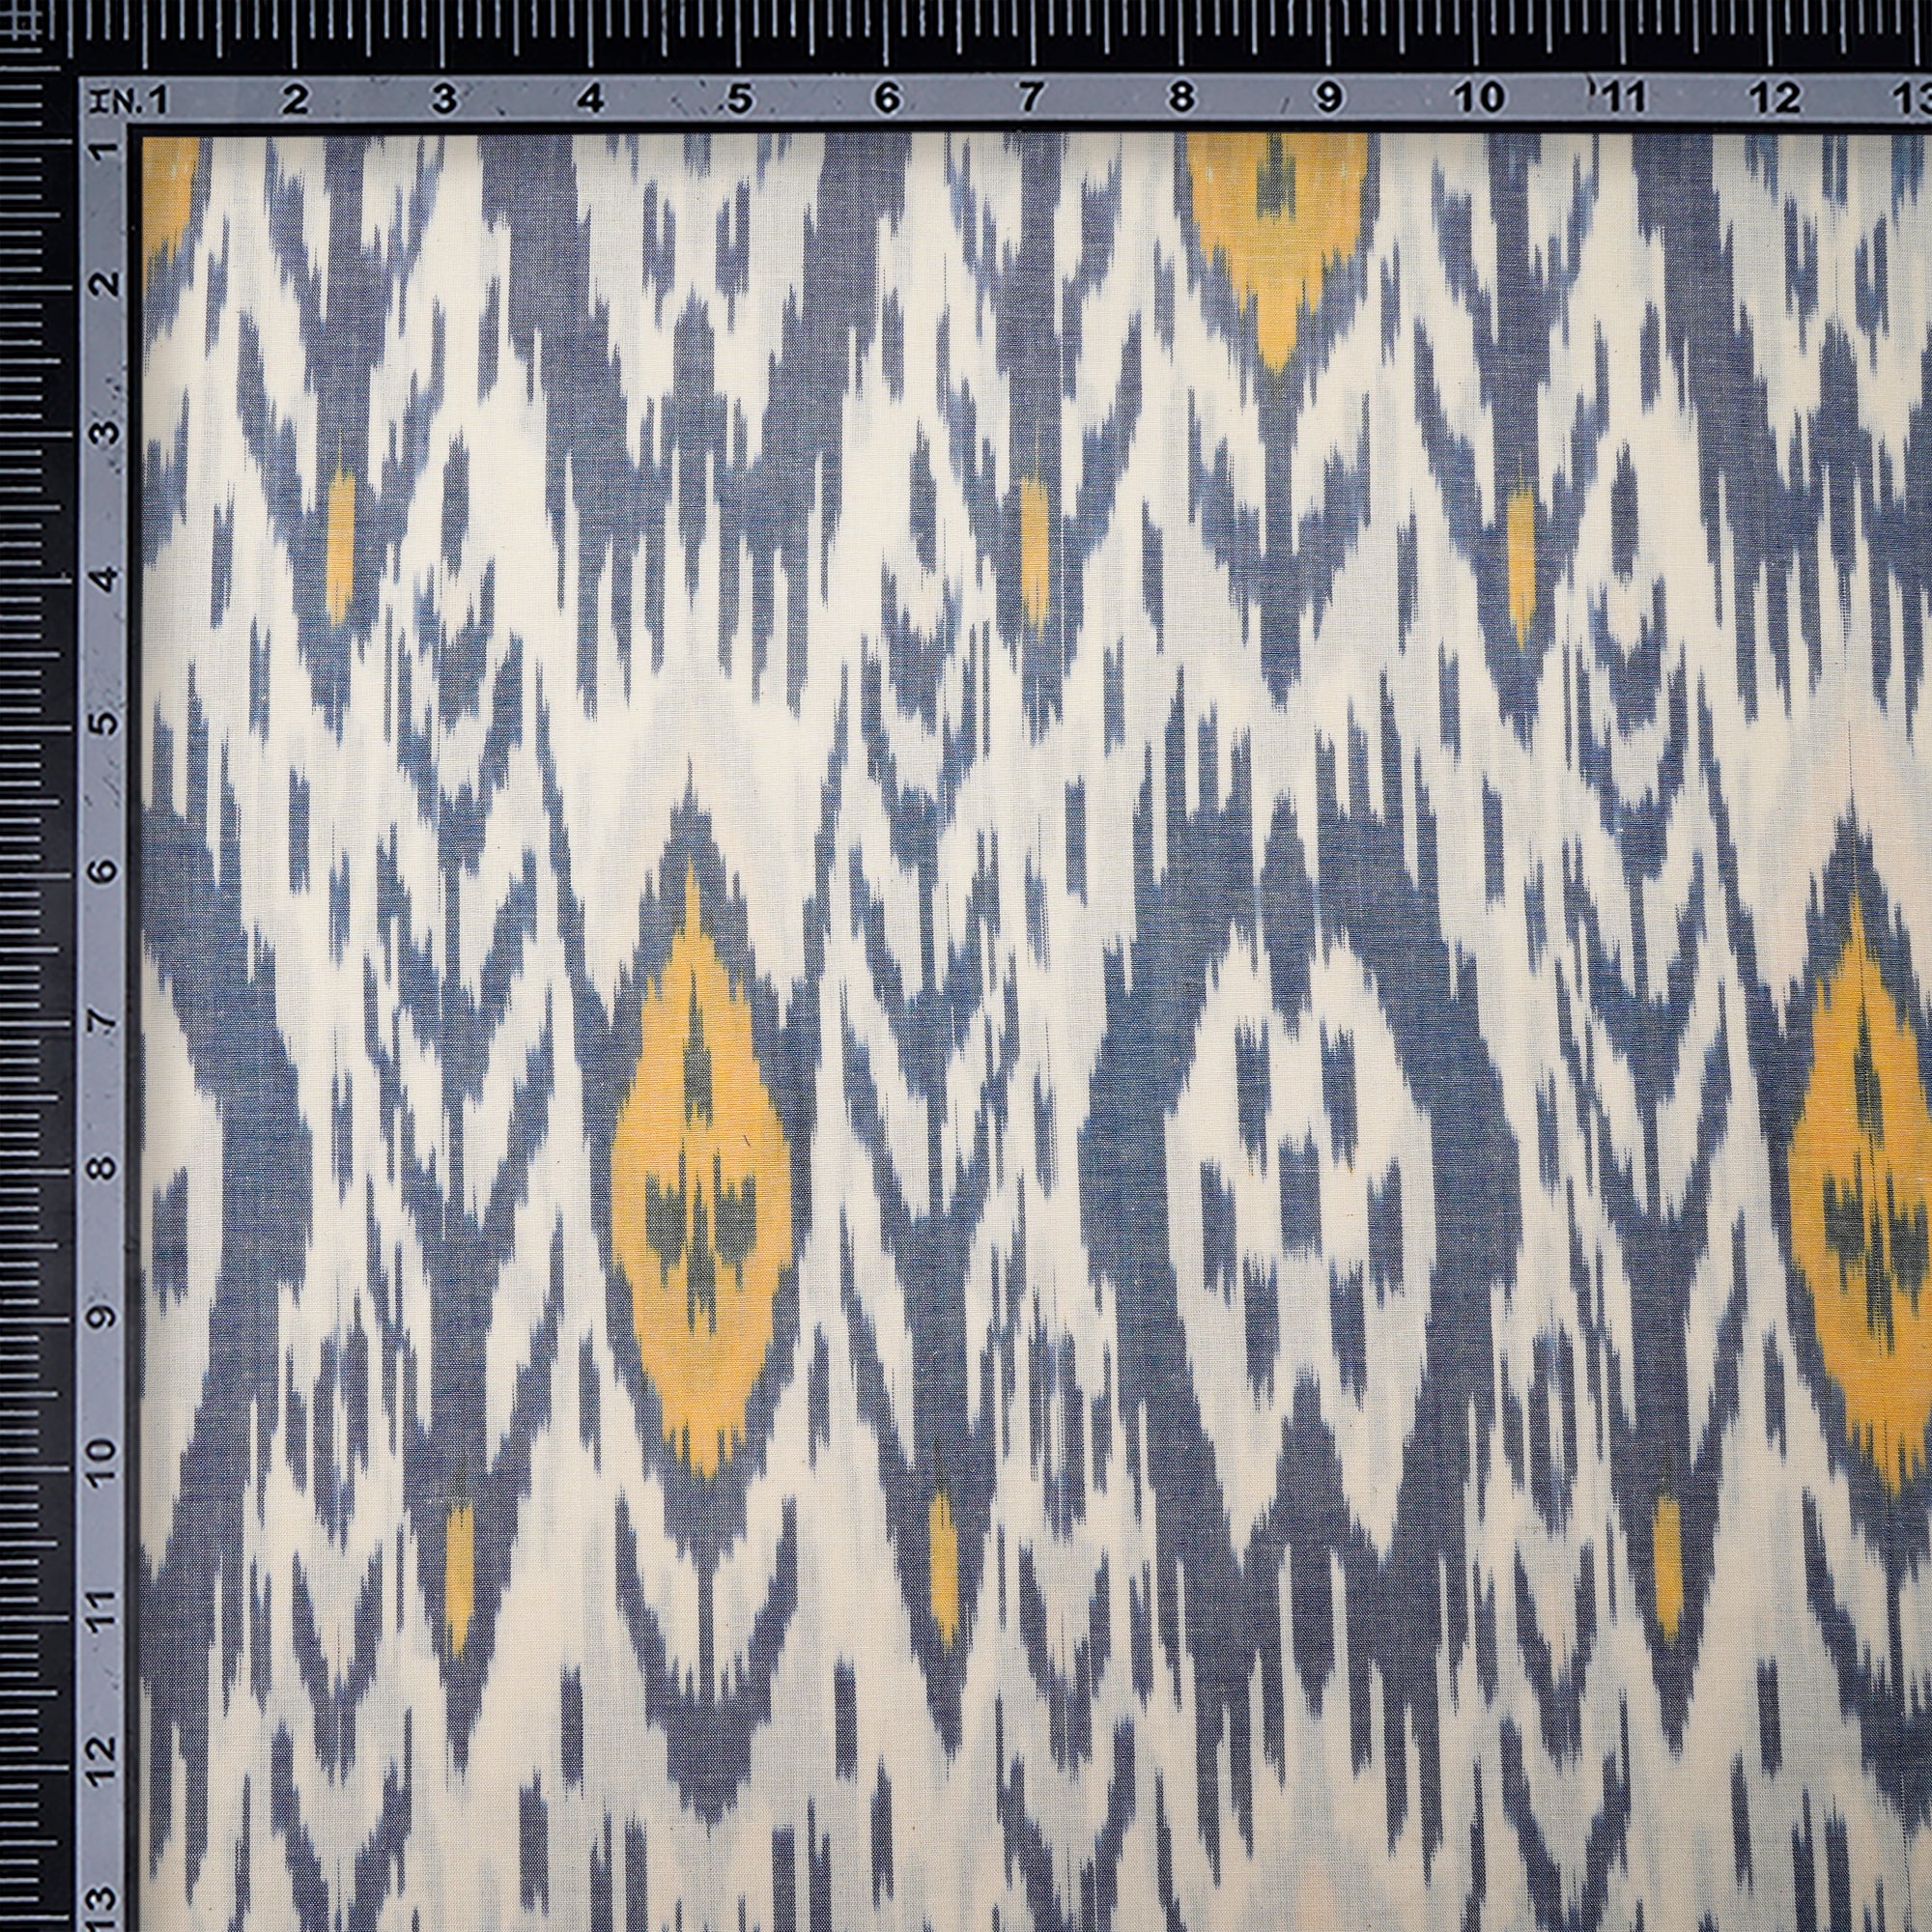 Blue-White Mercerized Washed Uzbek Motif Woven Ikat Cotton Fabric